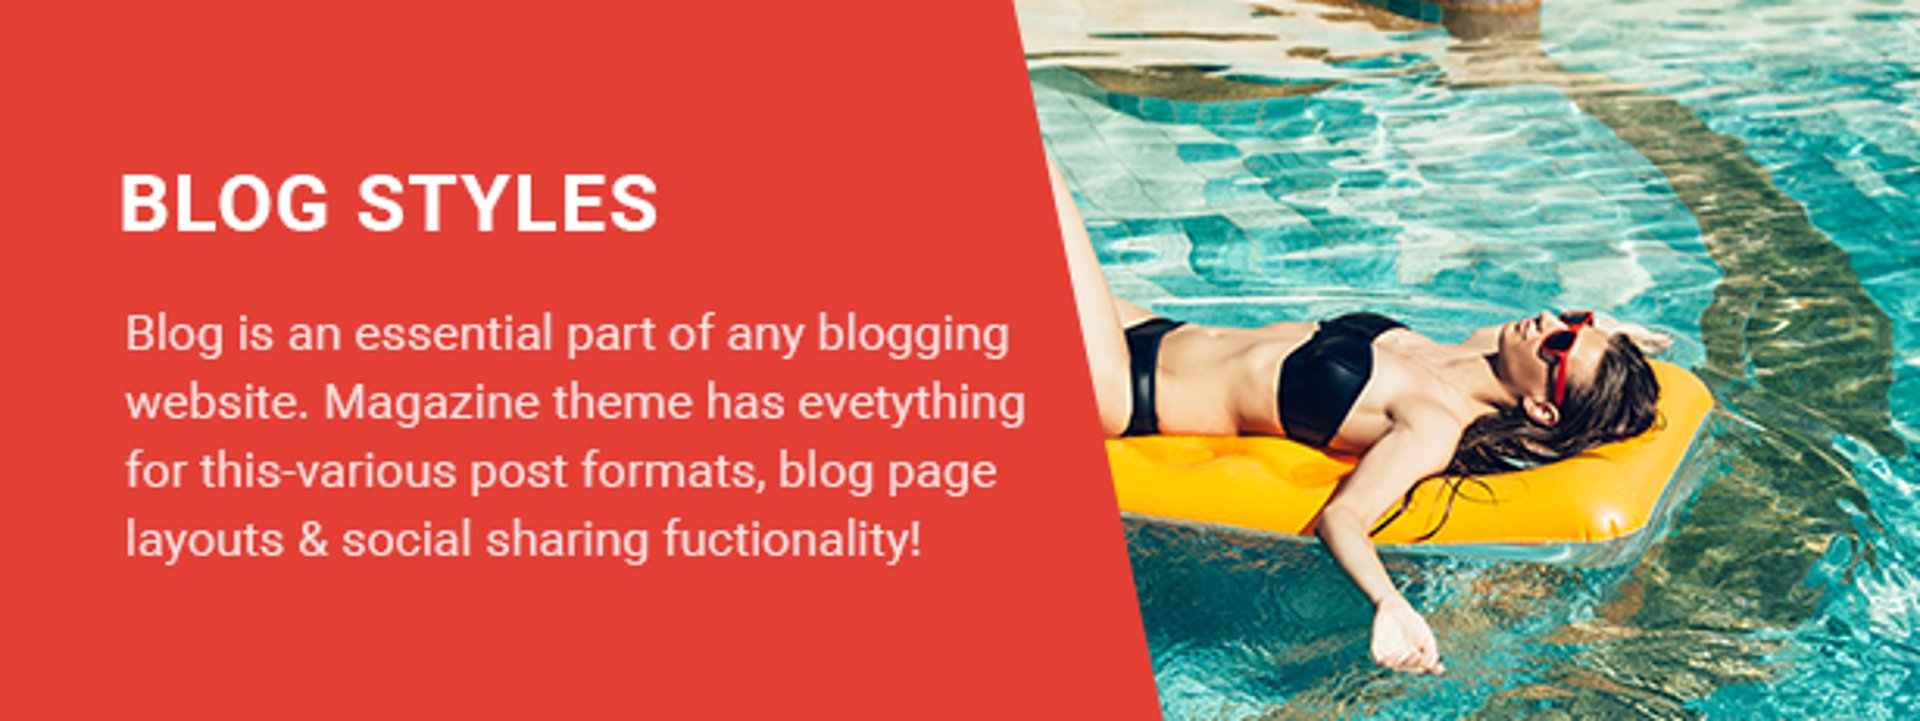 Top Magazine - Blog and News WordPress Theme - Blog Styles